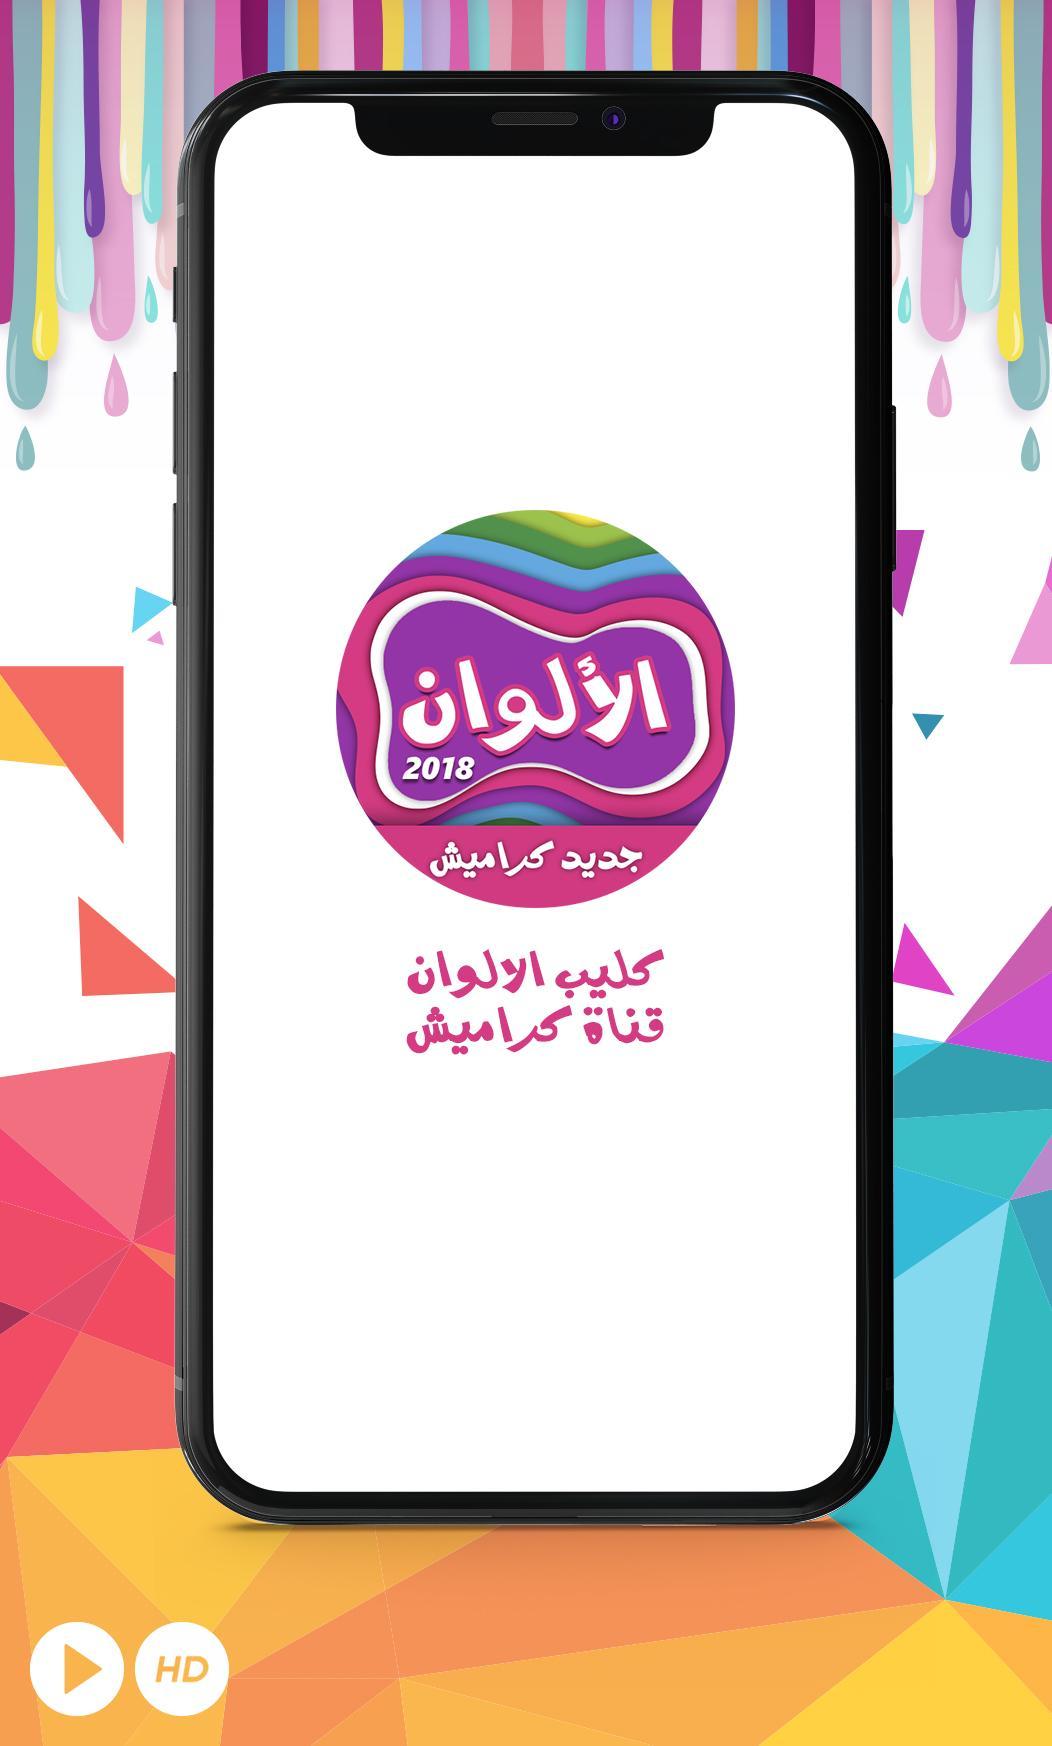 كليب الالوان - كراميش APK voor Android Download